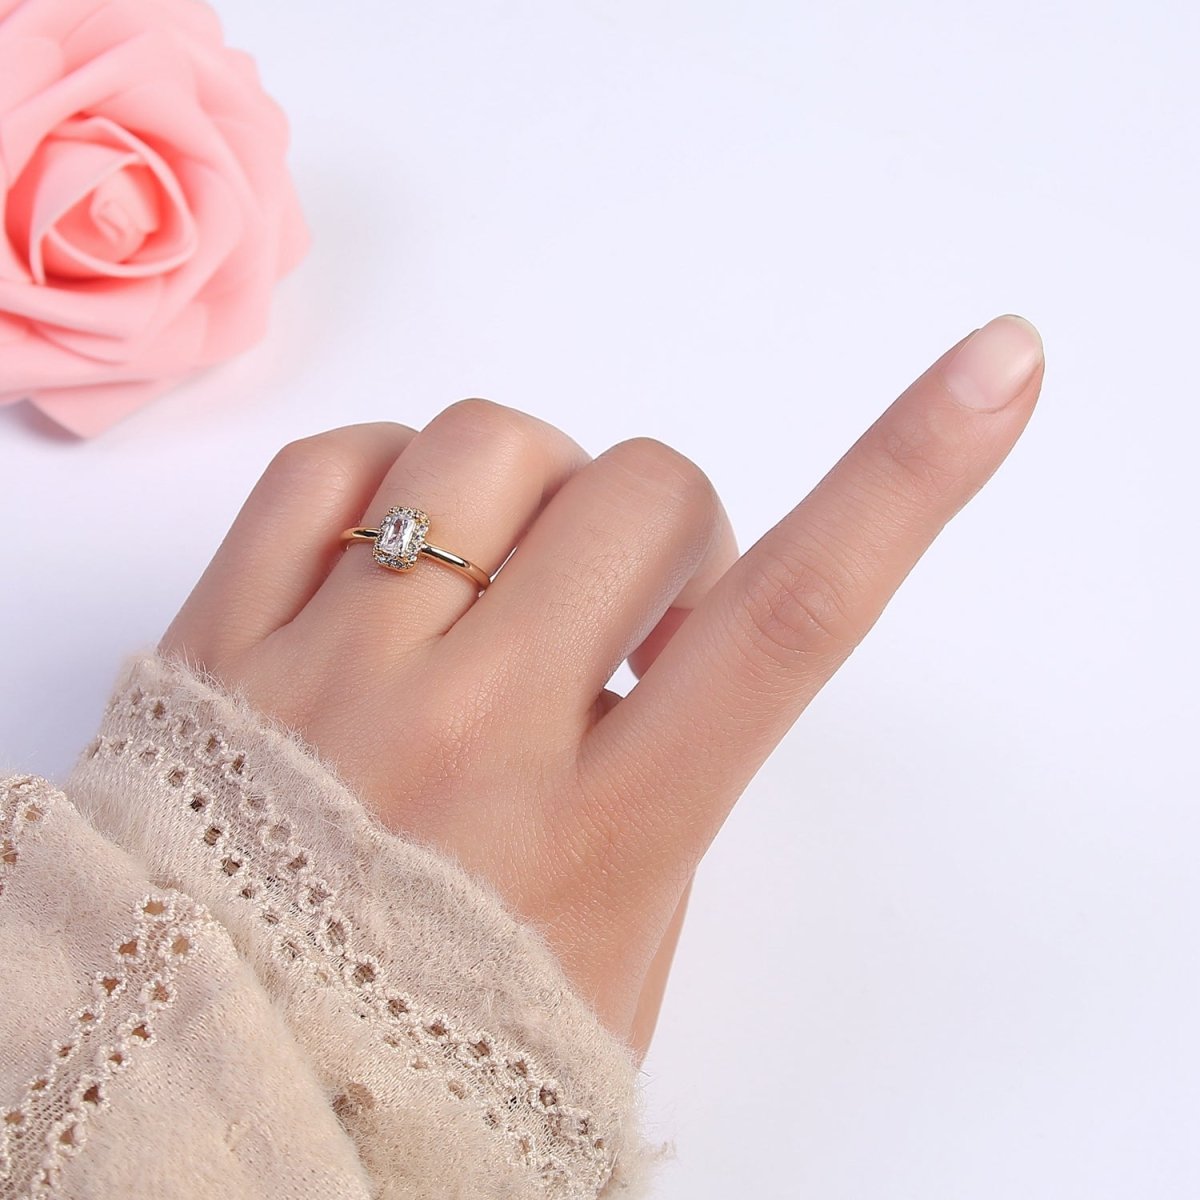 CZ Rectangle Ring Gold Ring Zircon Jewelry Rectangle Promise Ring Adjustable Ring Minimalist Jewelry U-498 - DLUXCA